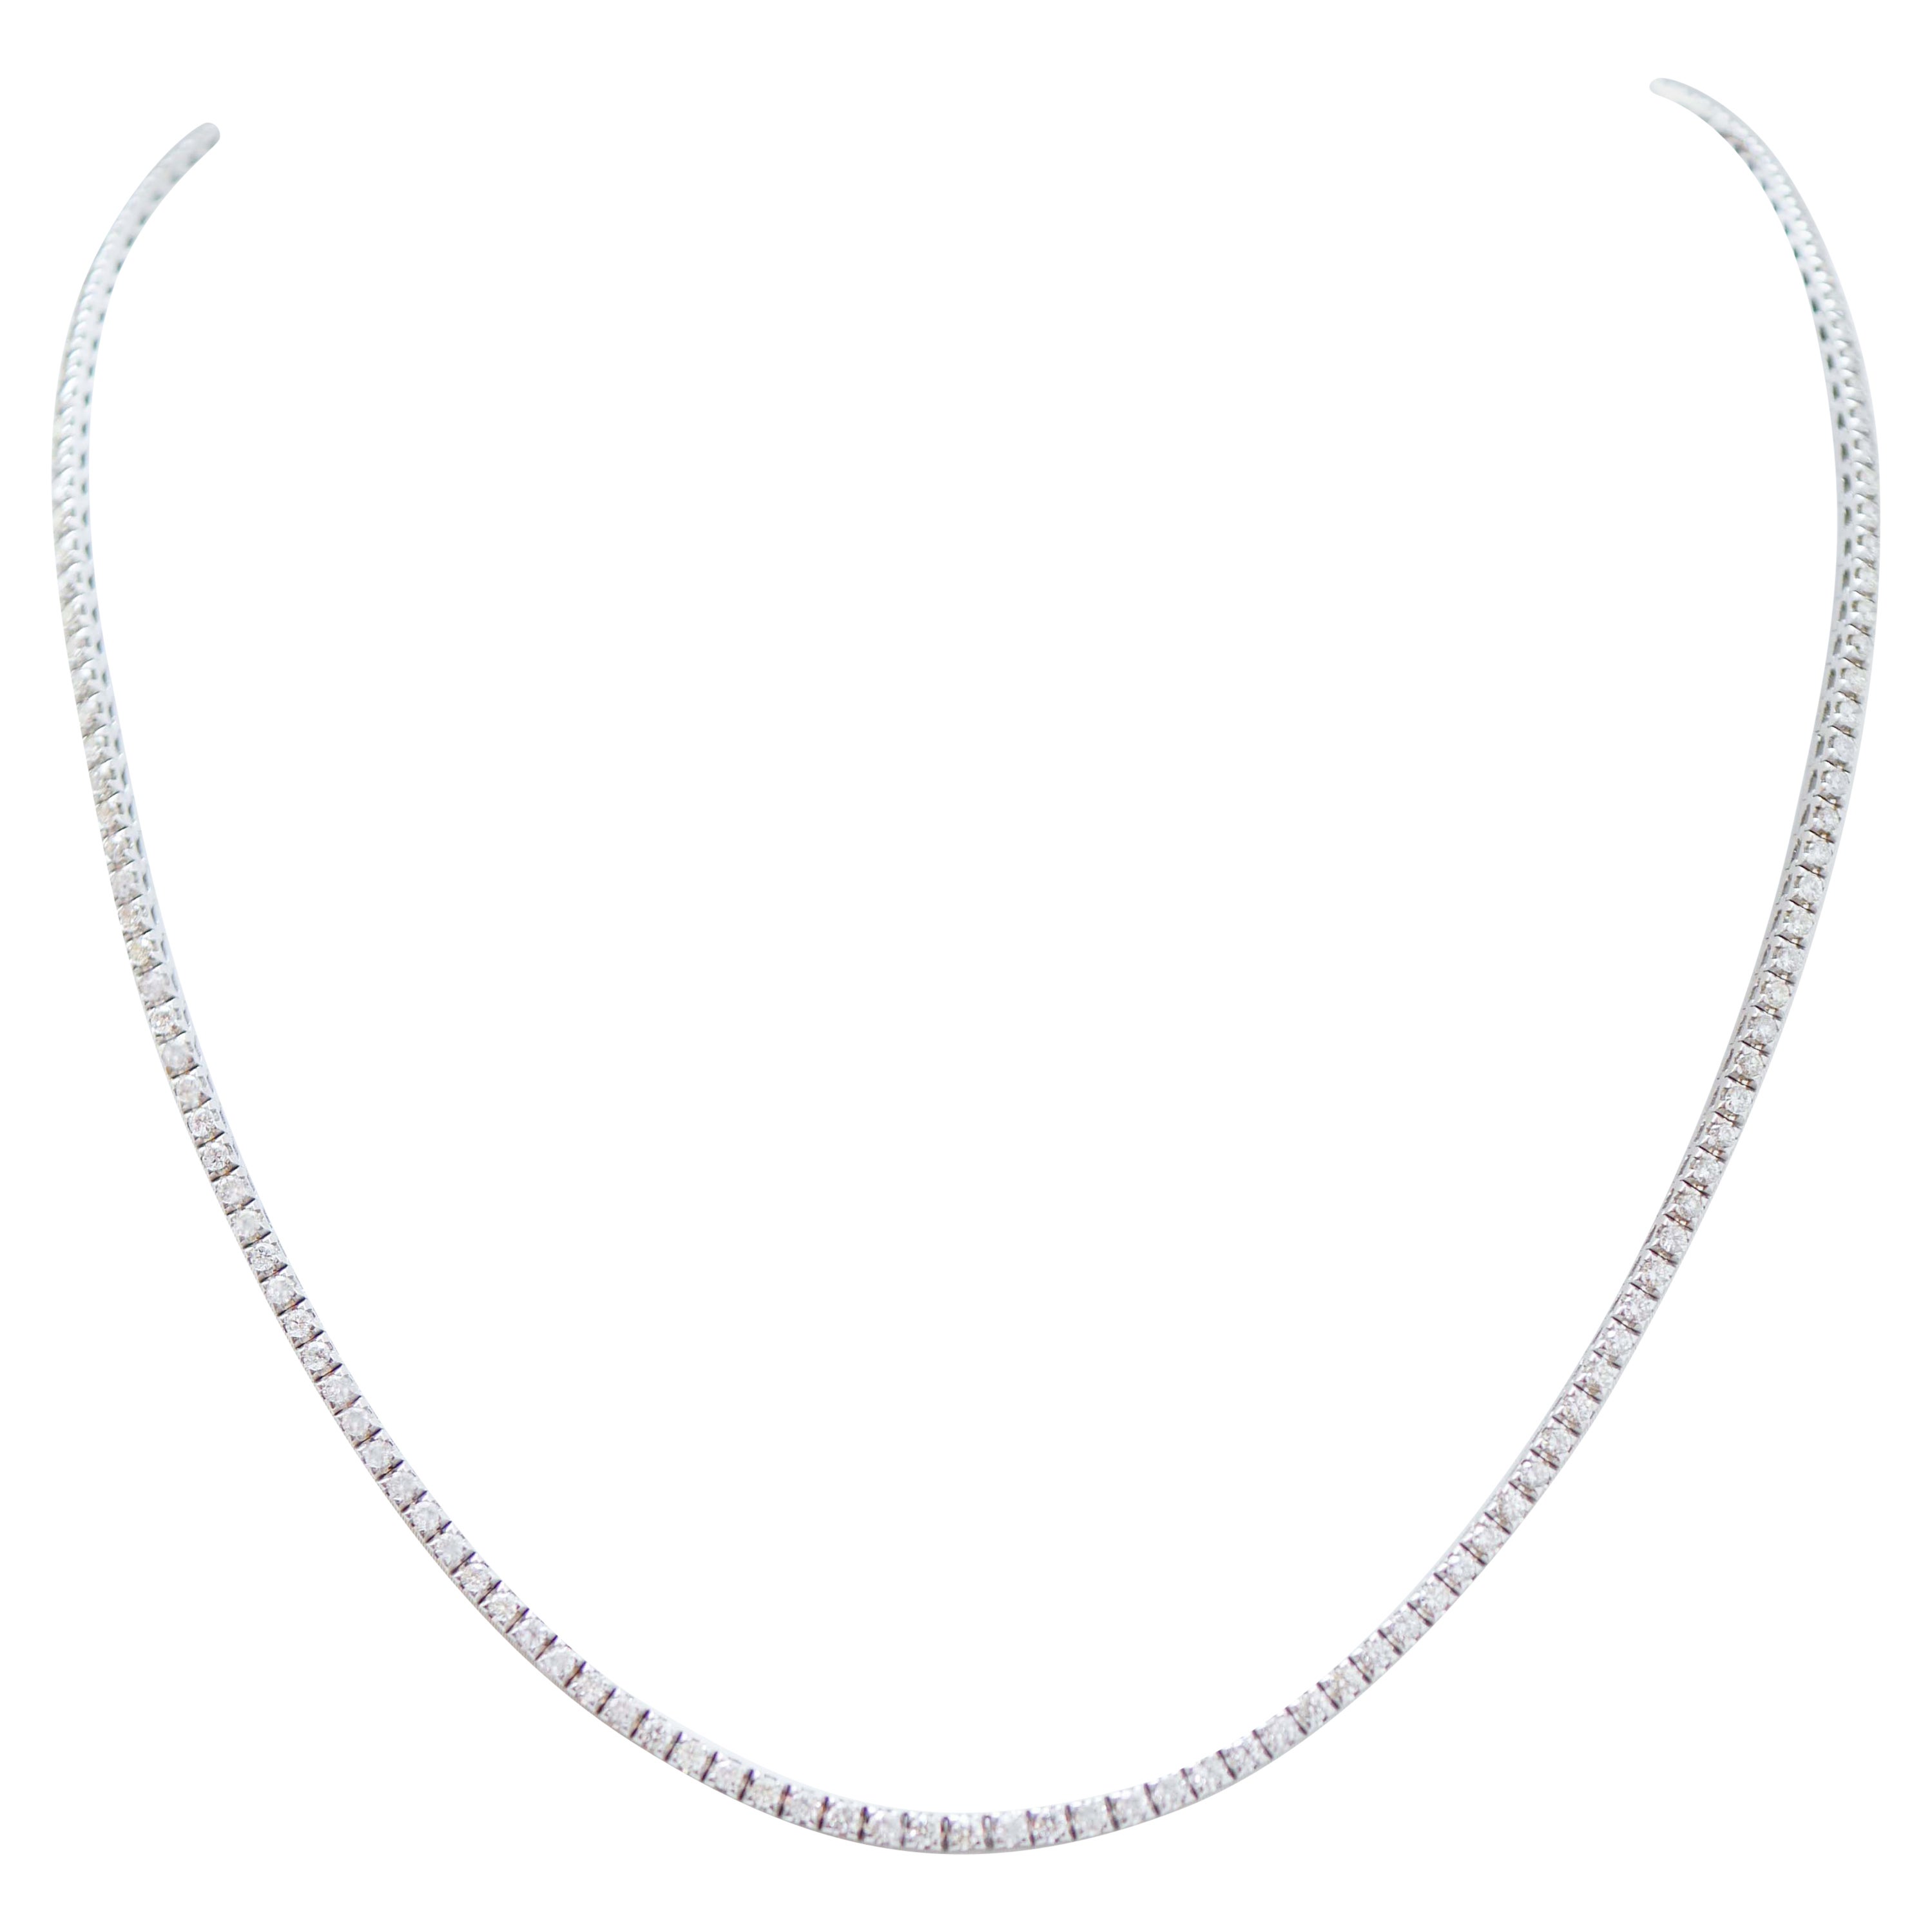 4.74 Carats Diamonds, 18 Karat White Gold Tennis Necklace. For Sale